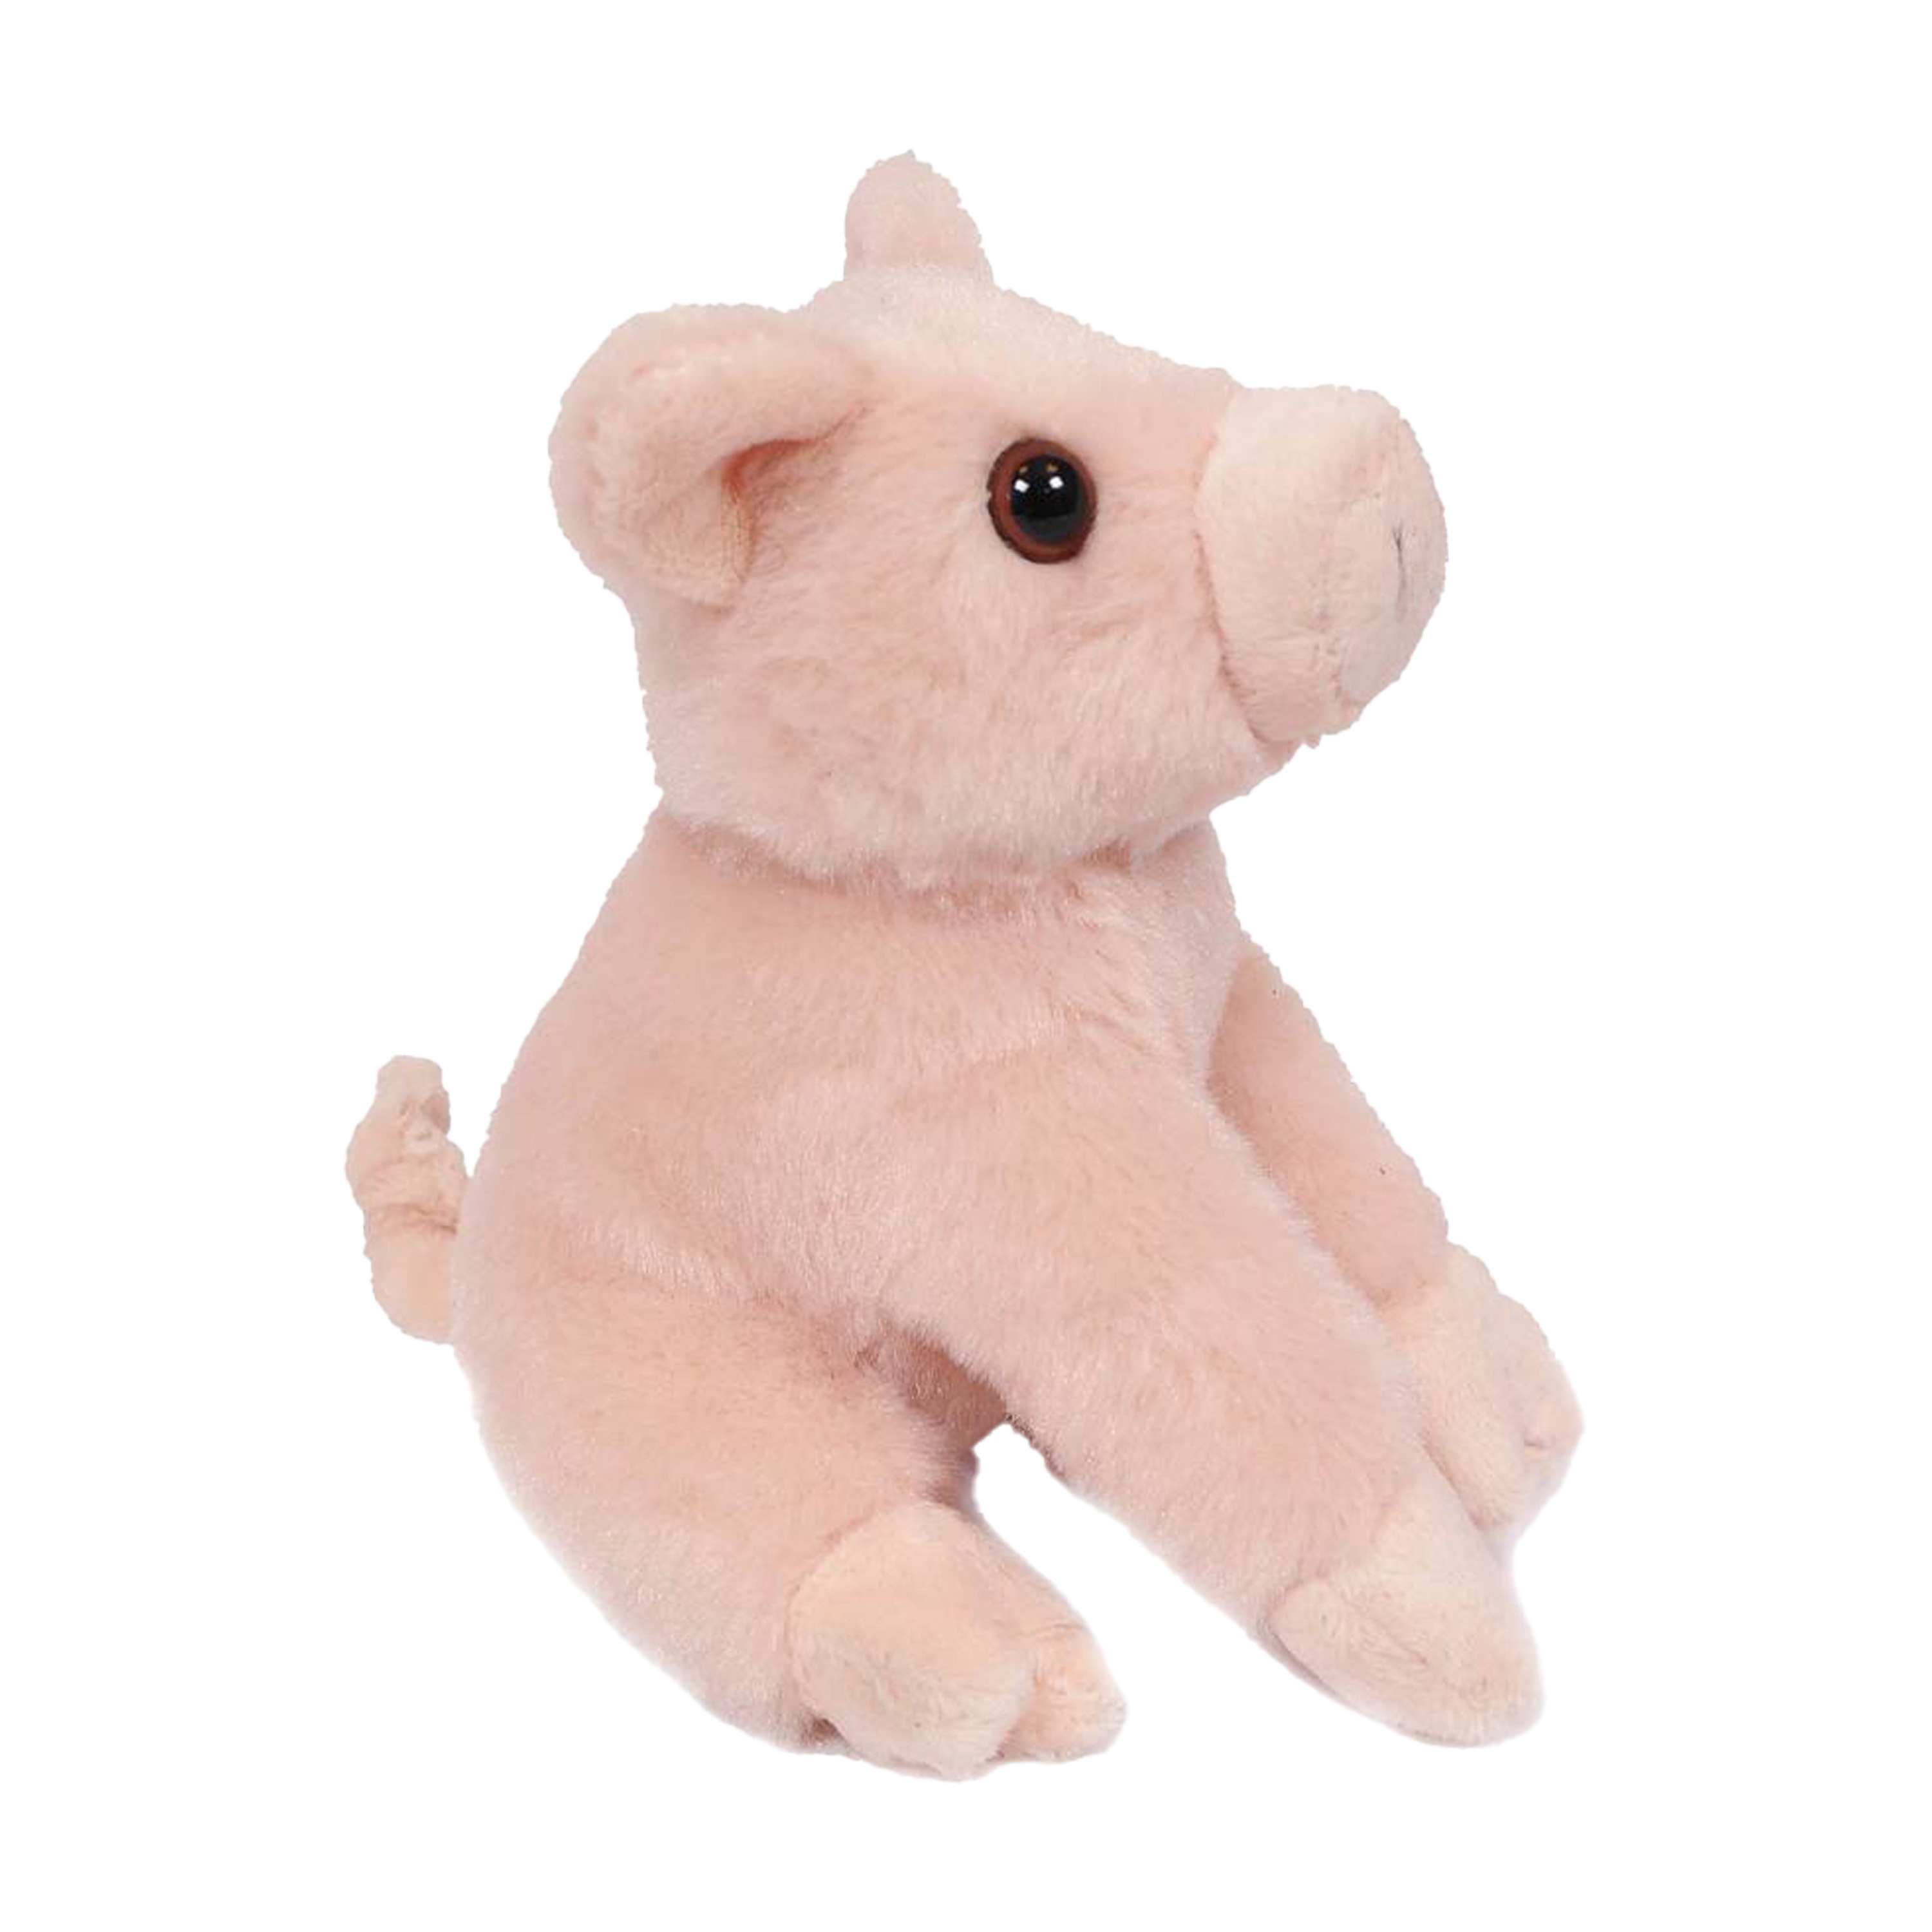 Pia Toys Knuffeldier Varken-biggetje roze pluche stof premium kwaliteit knuffels 12 cm